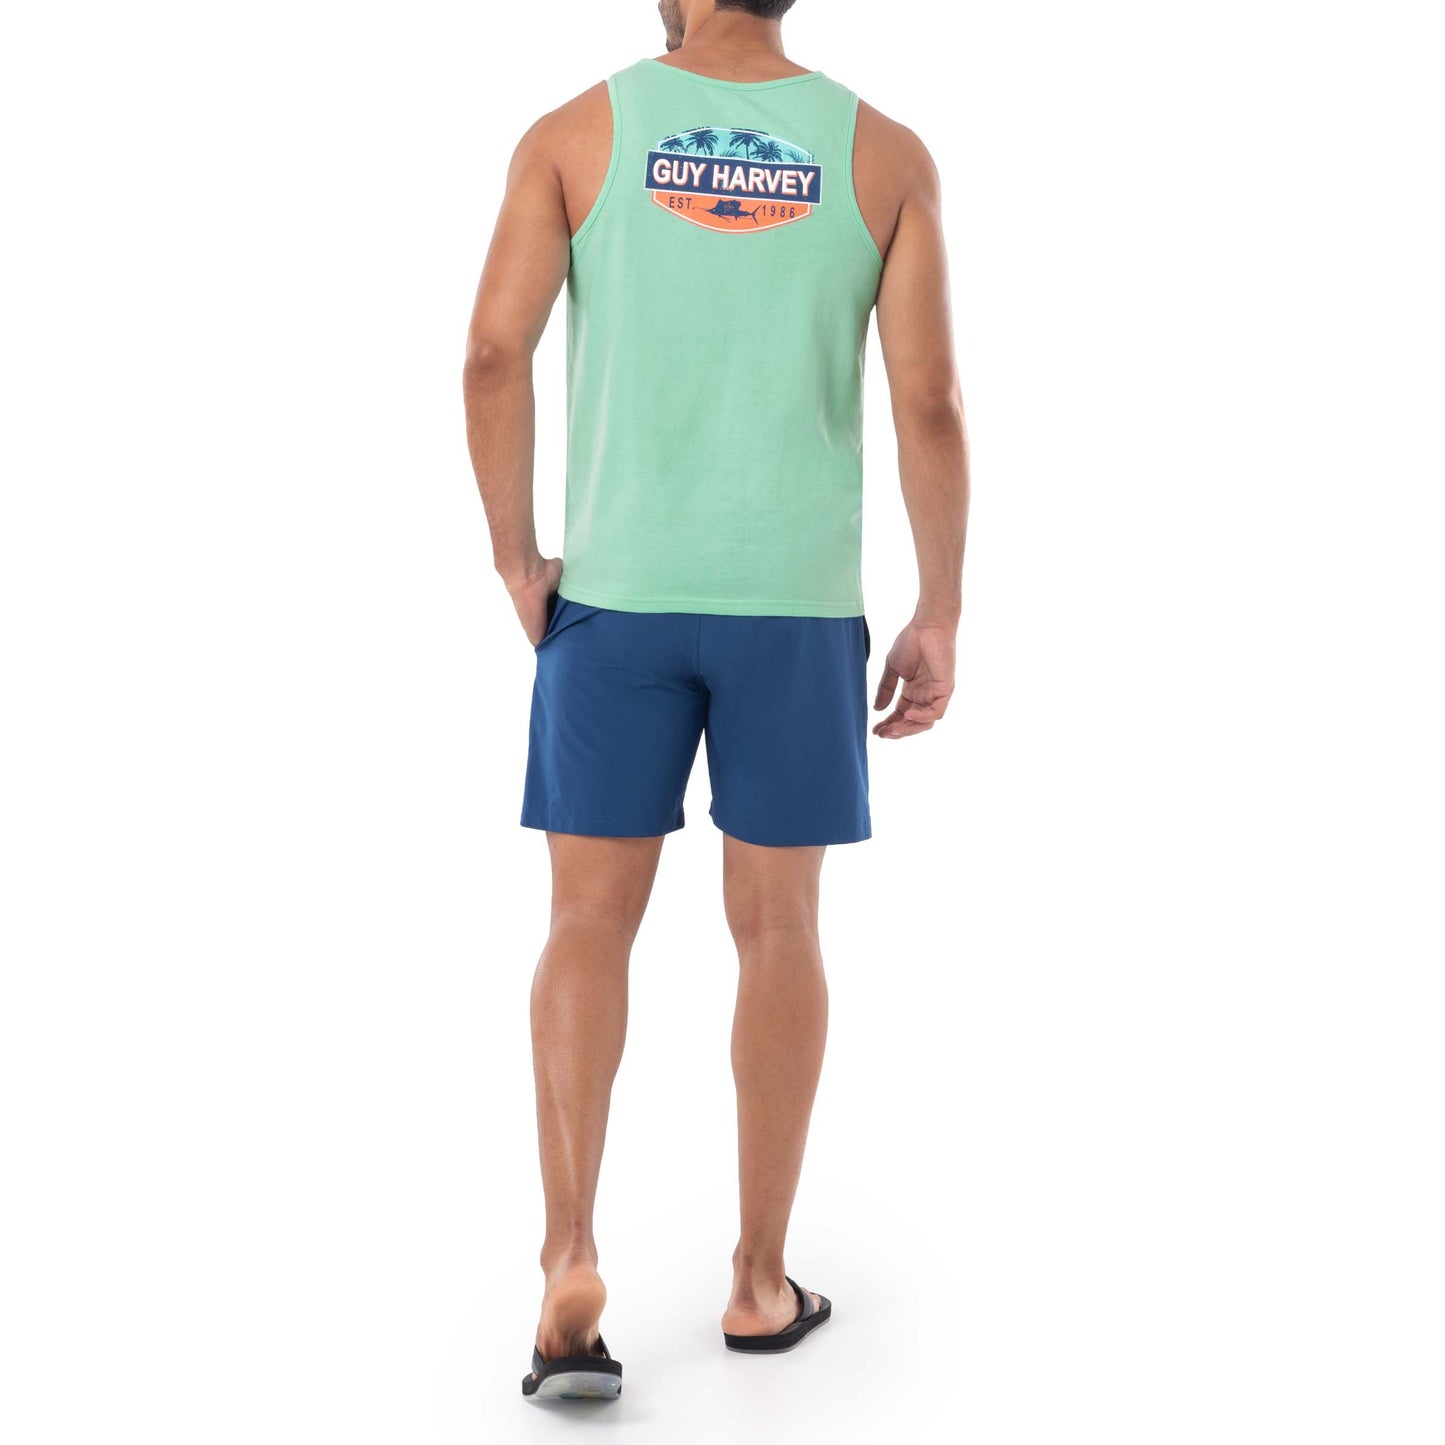 Fly Fishing Shirts' Men's Premium Tank Top